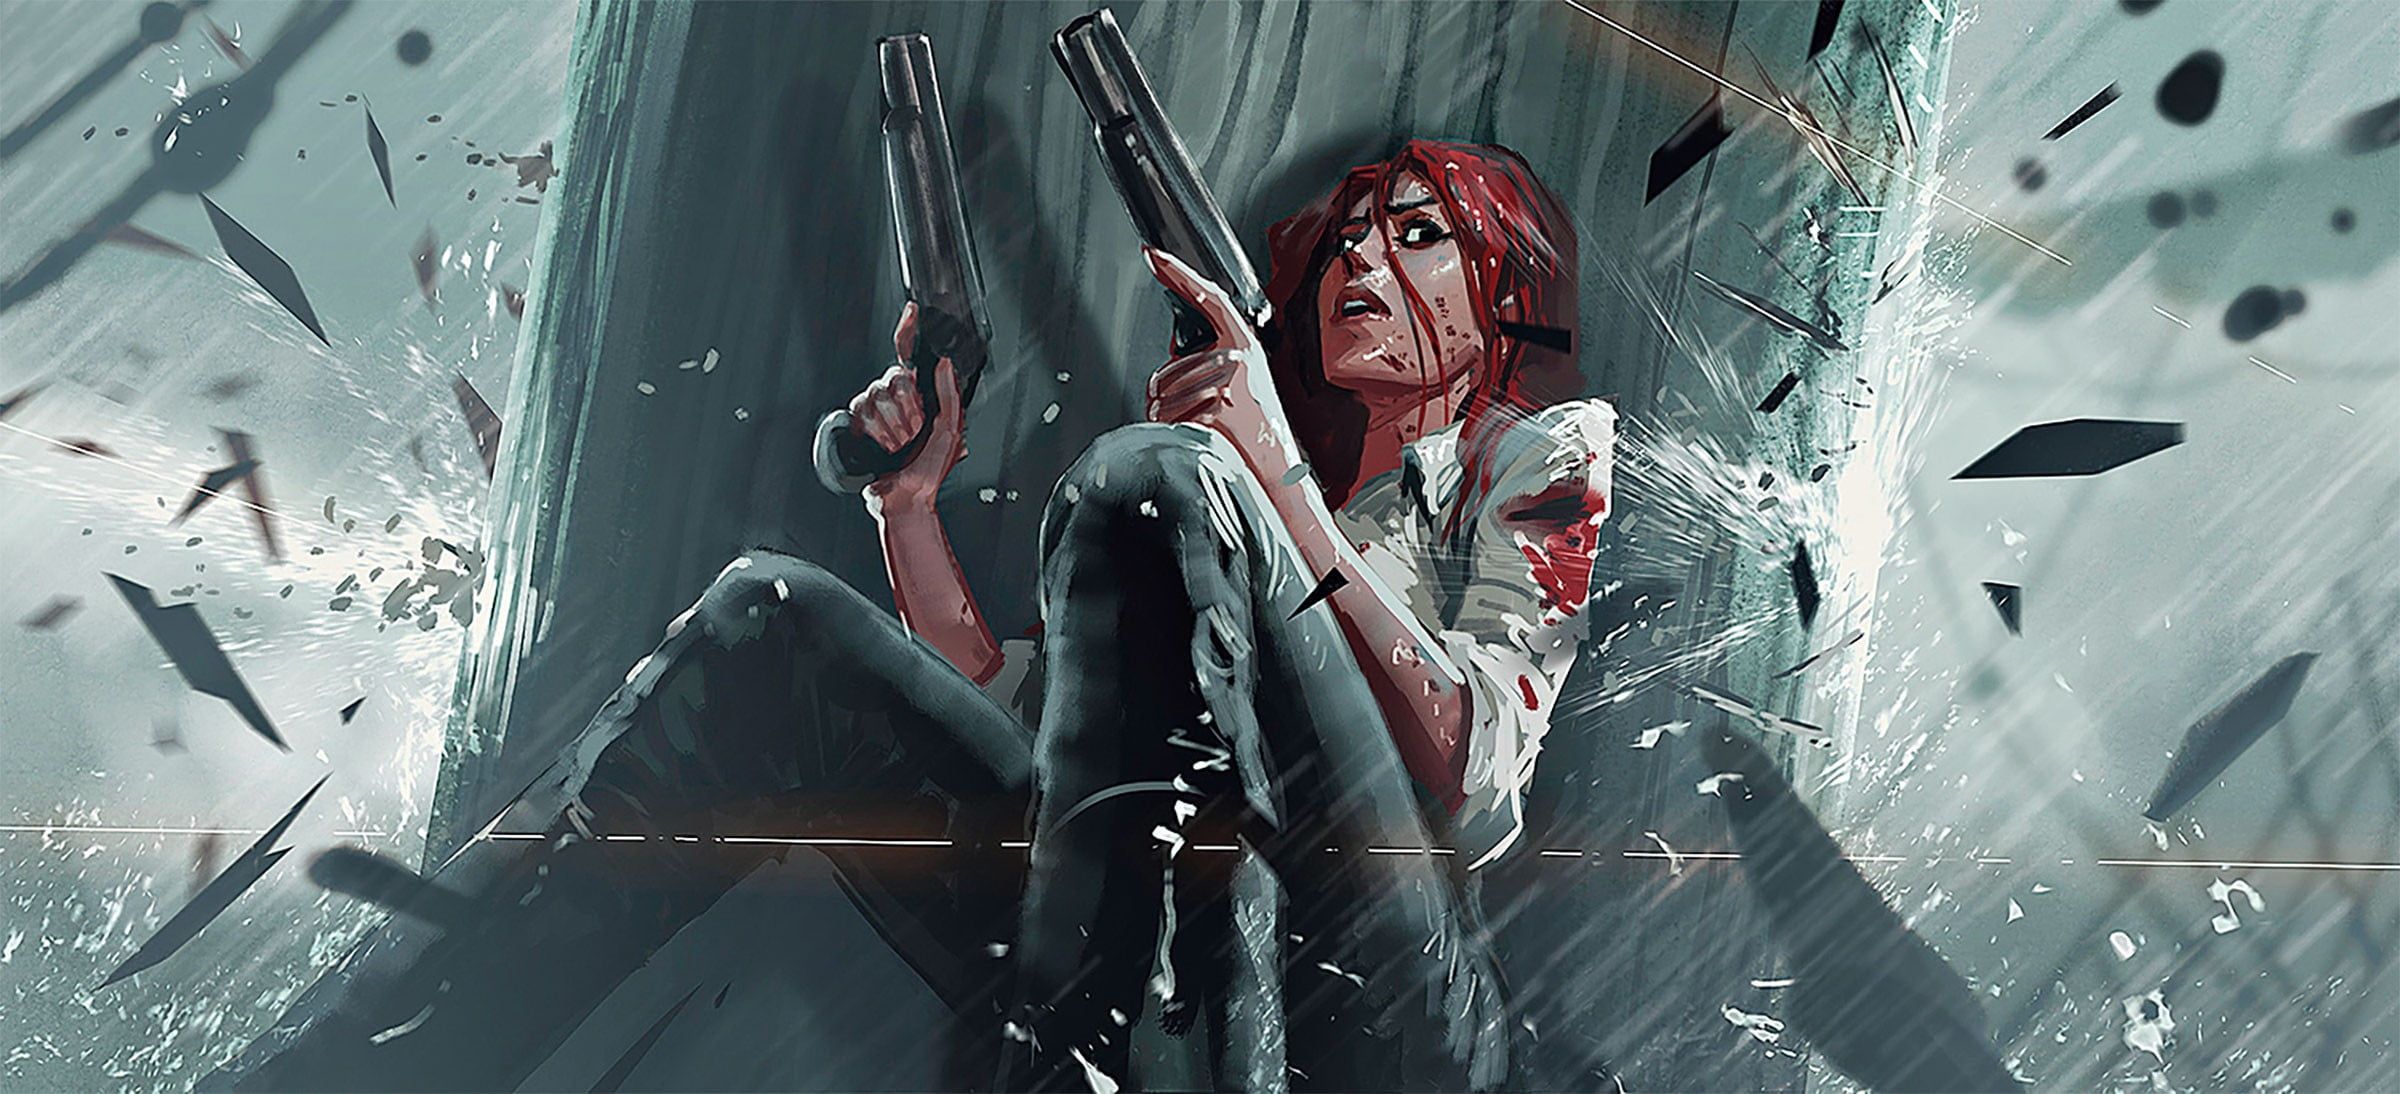 Female character holding gun illustration, Miss Fortune, League